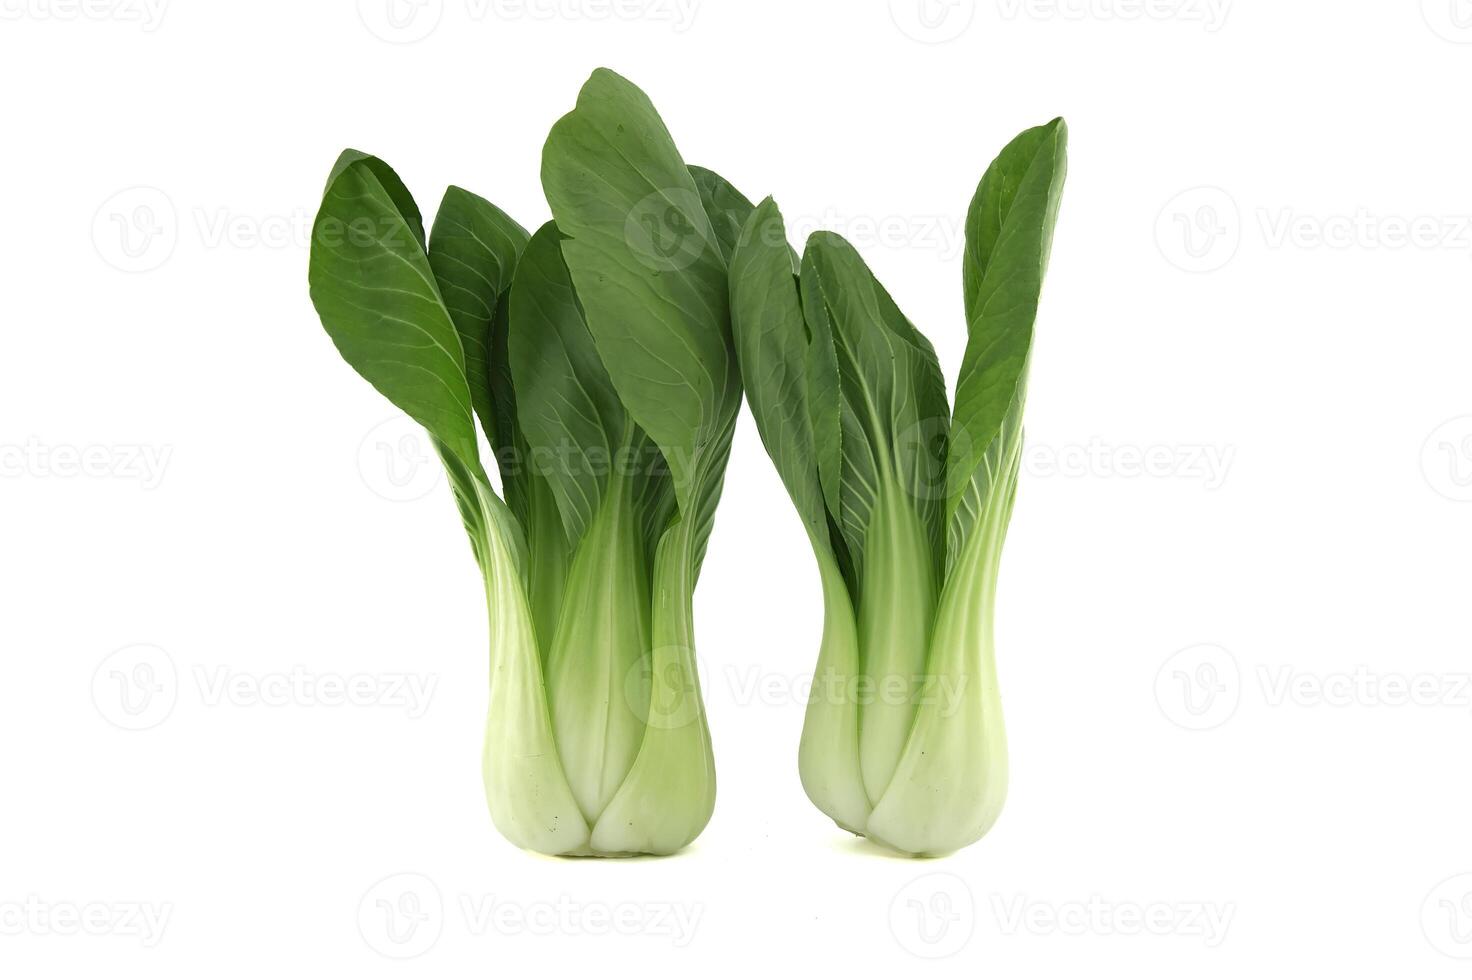 pok choi legumes arranjado em branco fundo foto